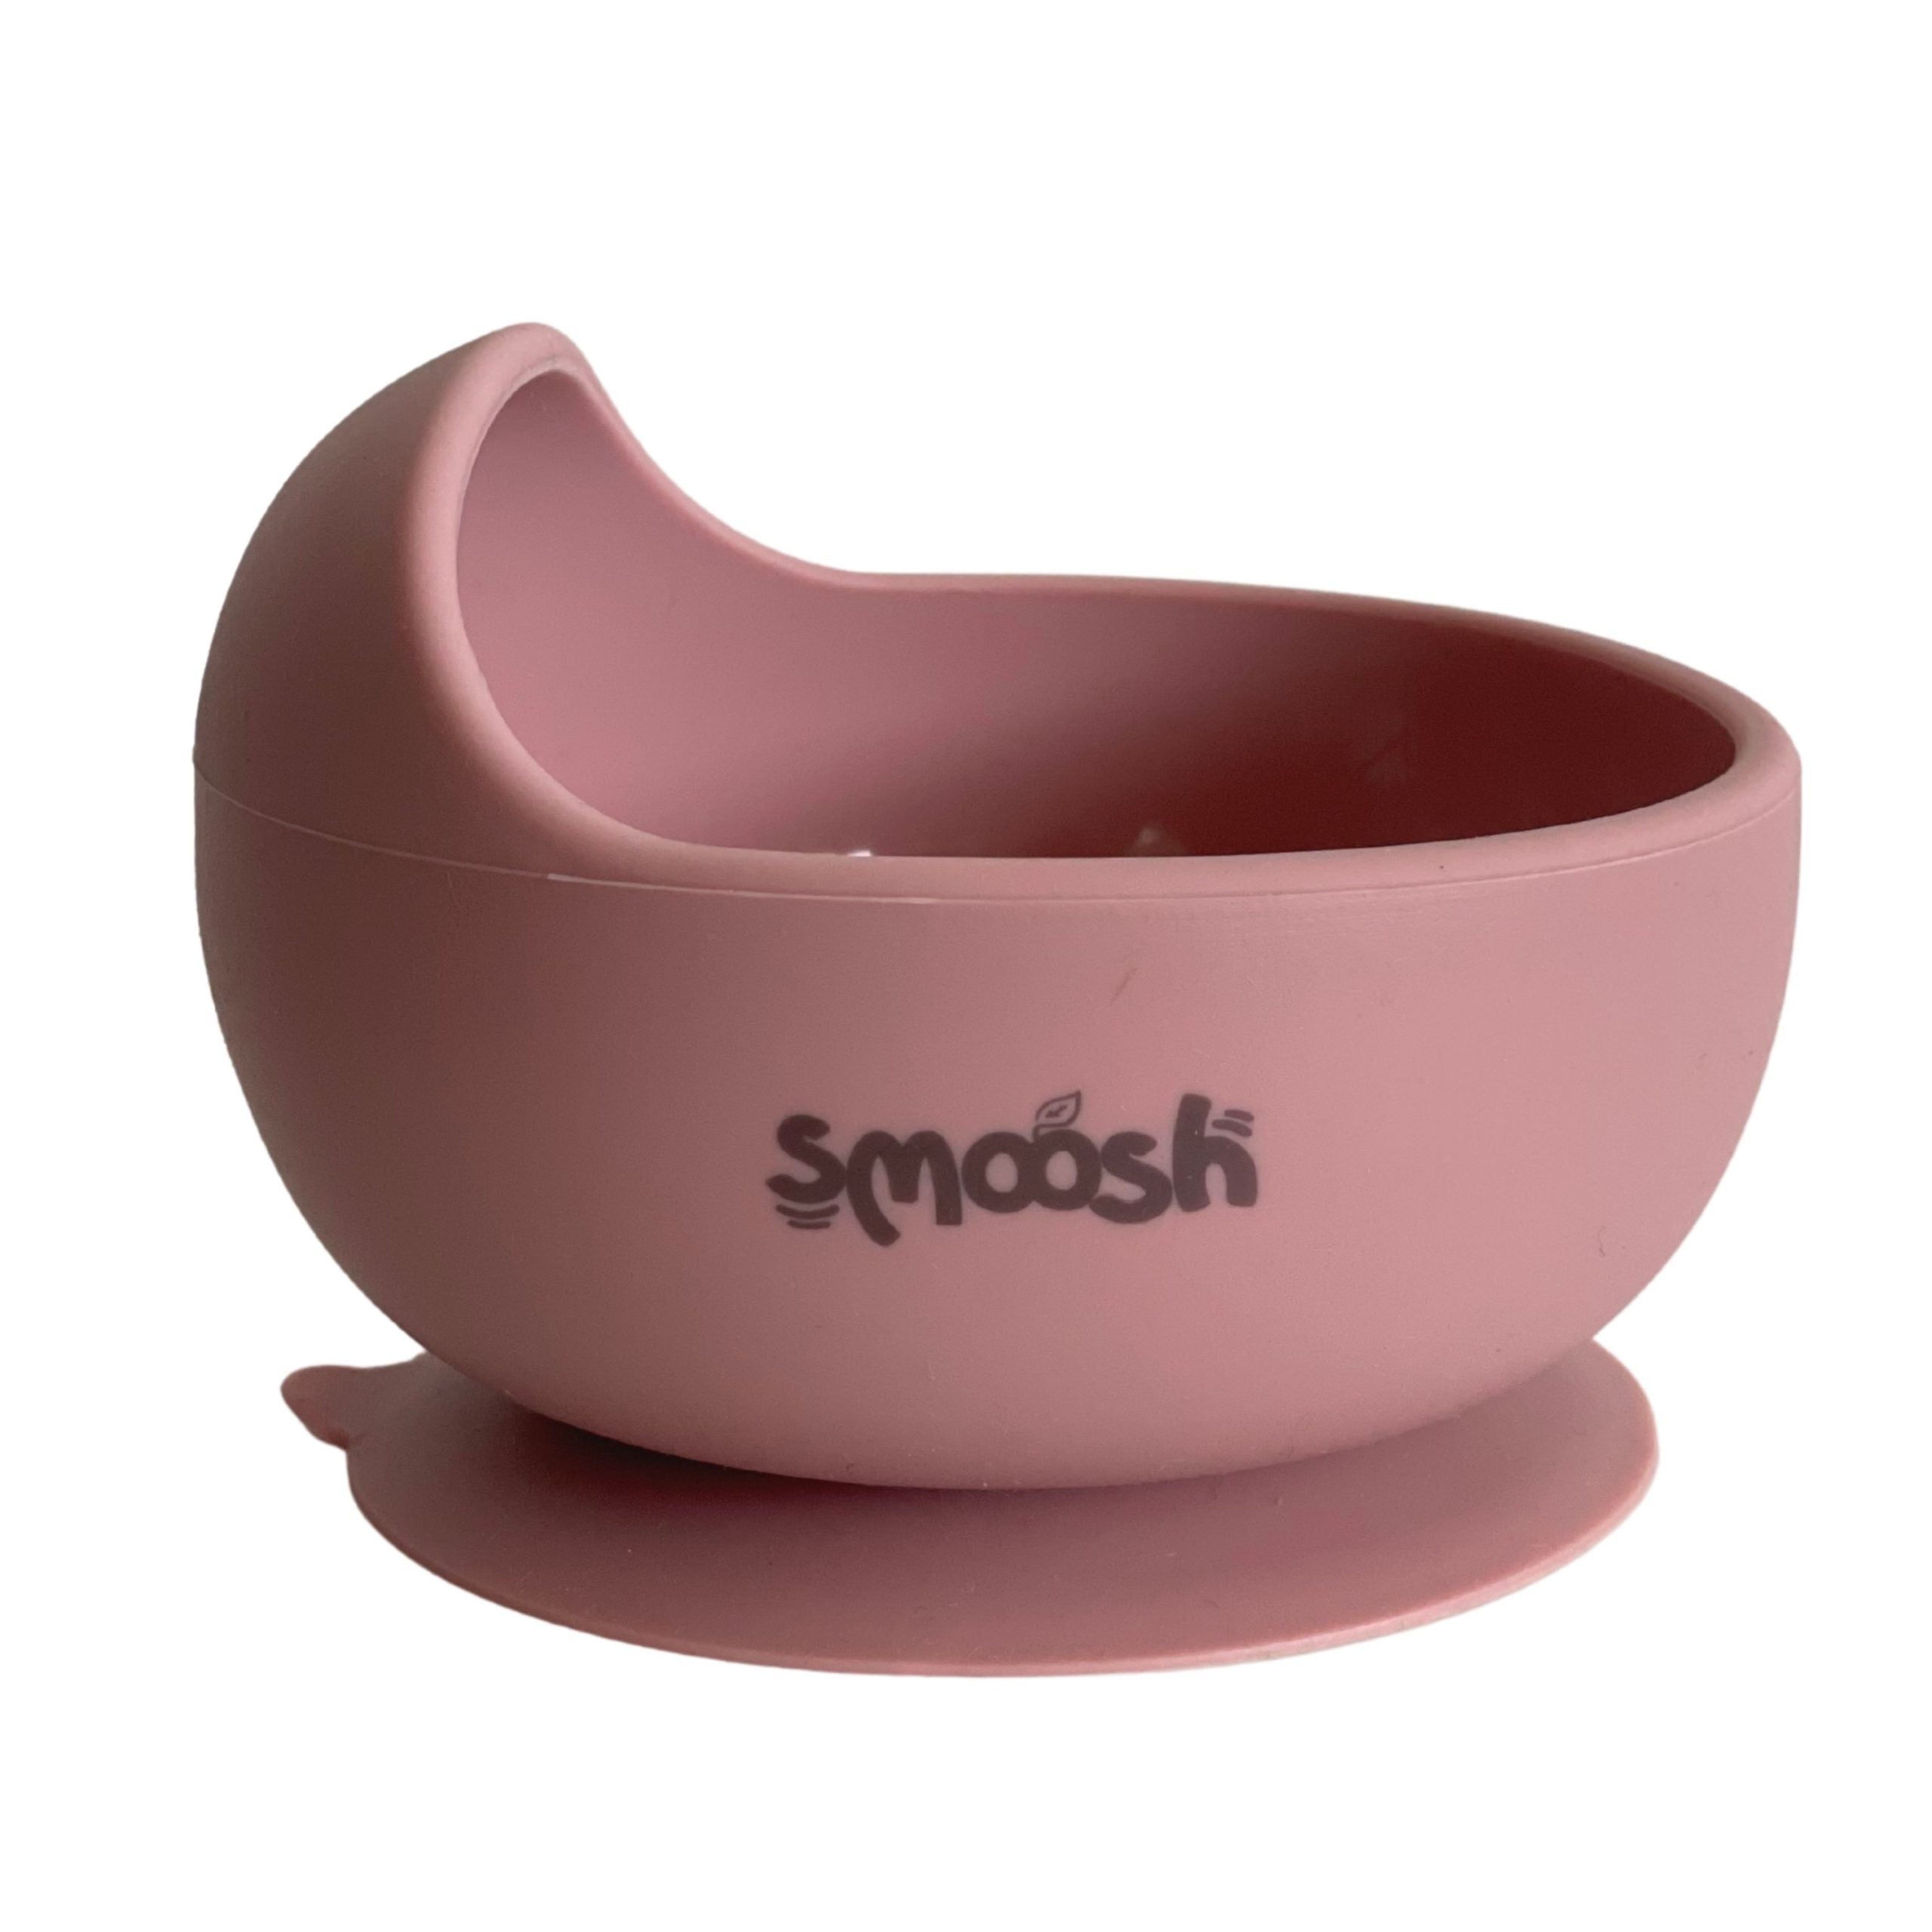 Smoosh Cuddle Bowl Pink - Tiny Tots Baby Store 